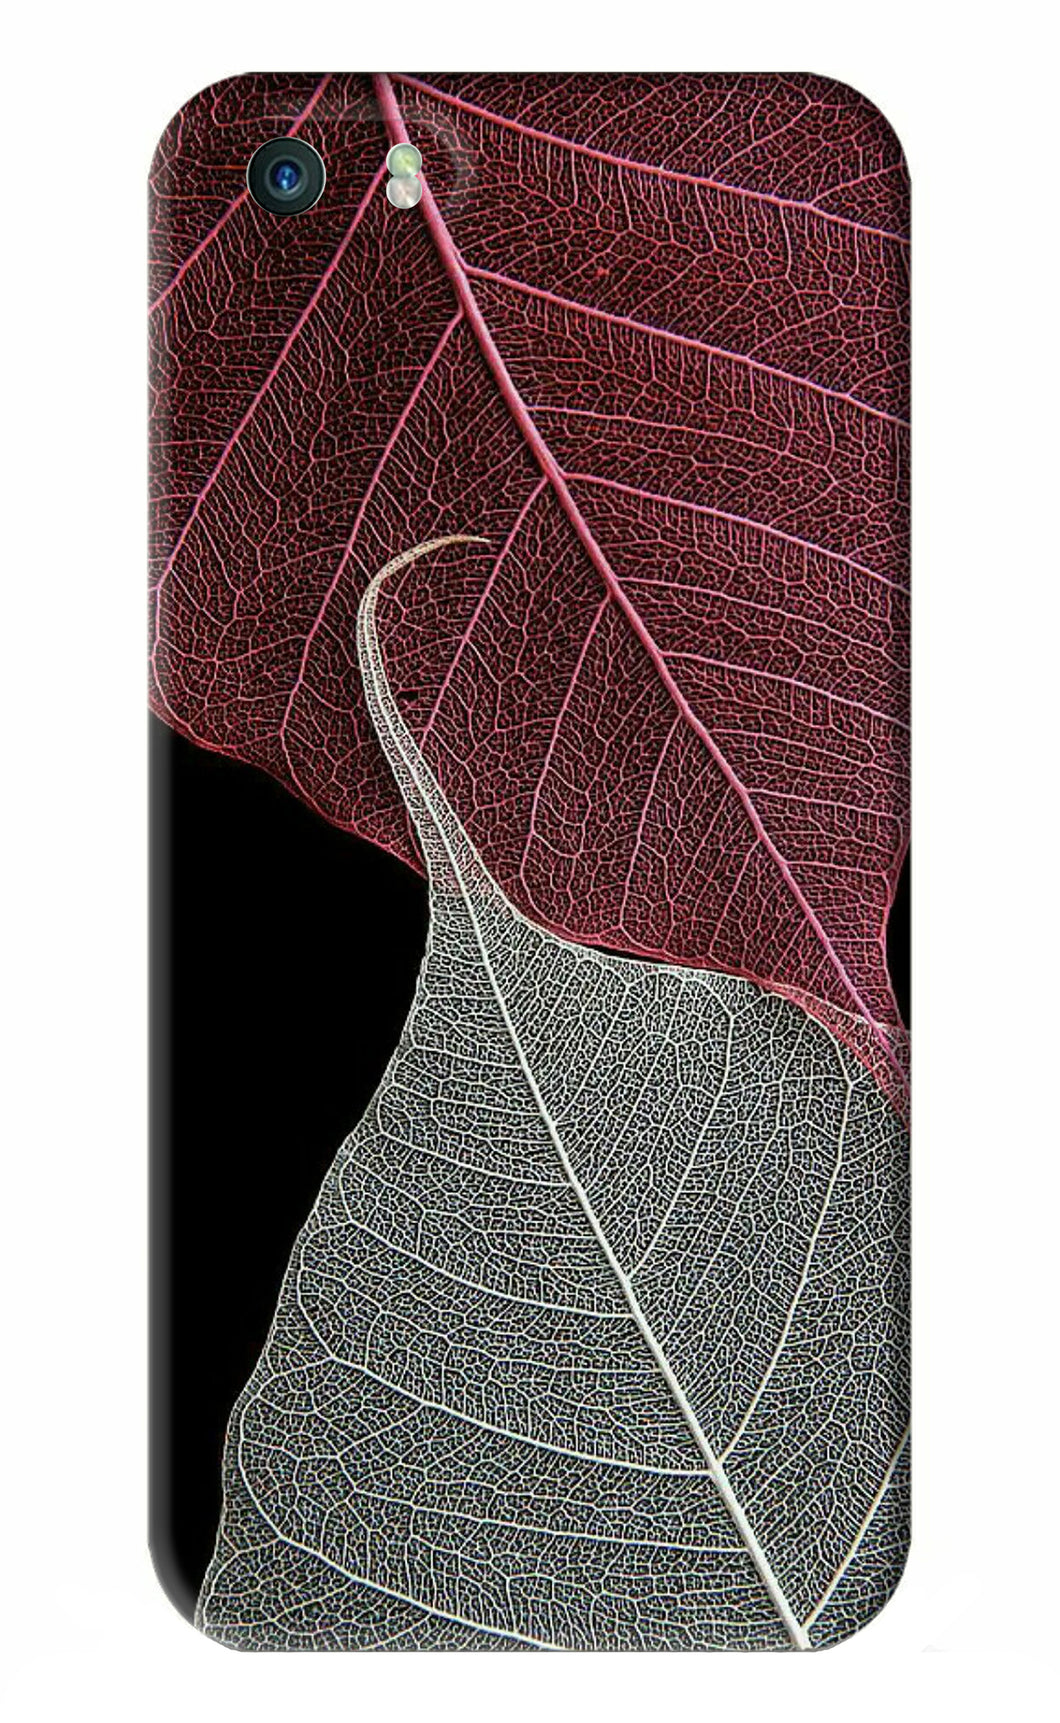 Leaf Pattern iPhone 5S Back Skin Wrap